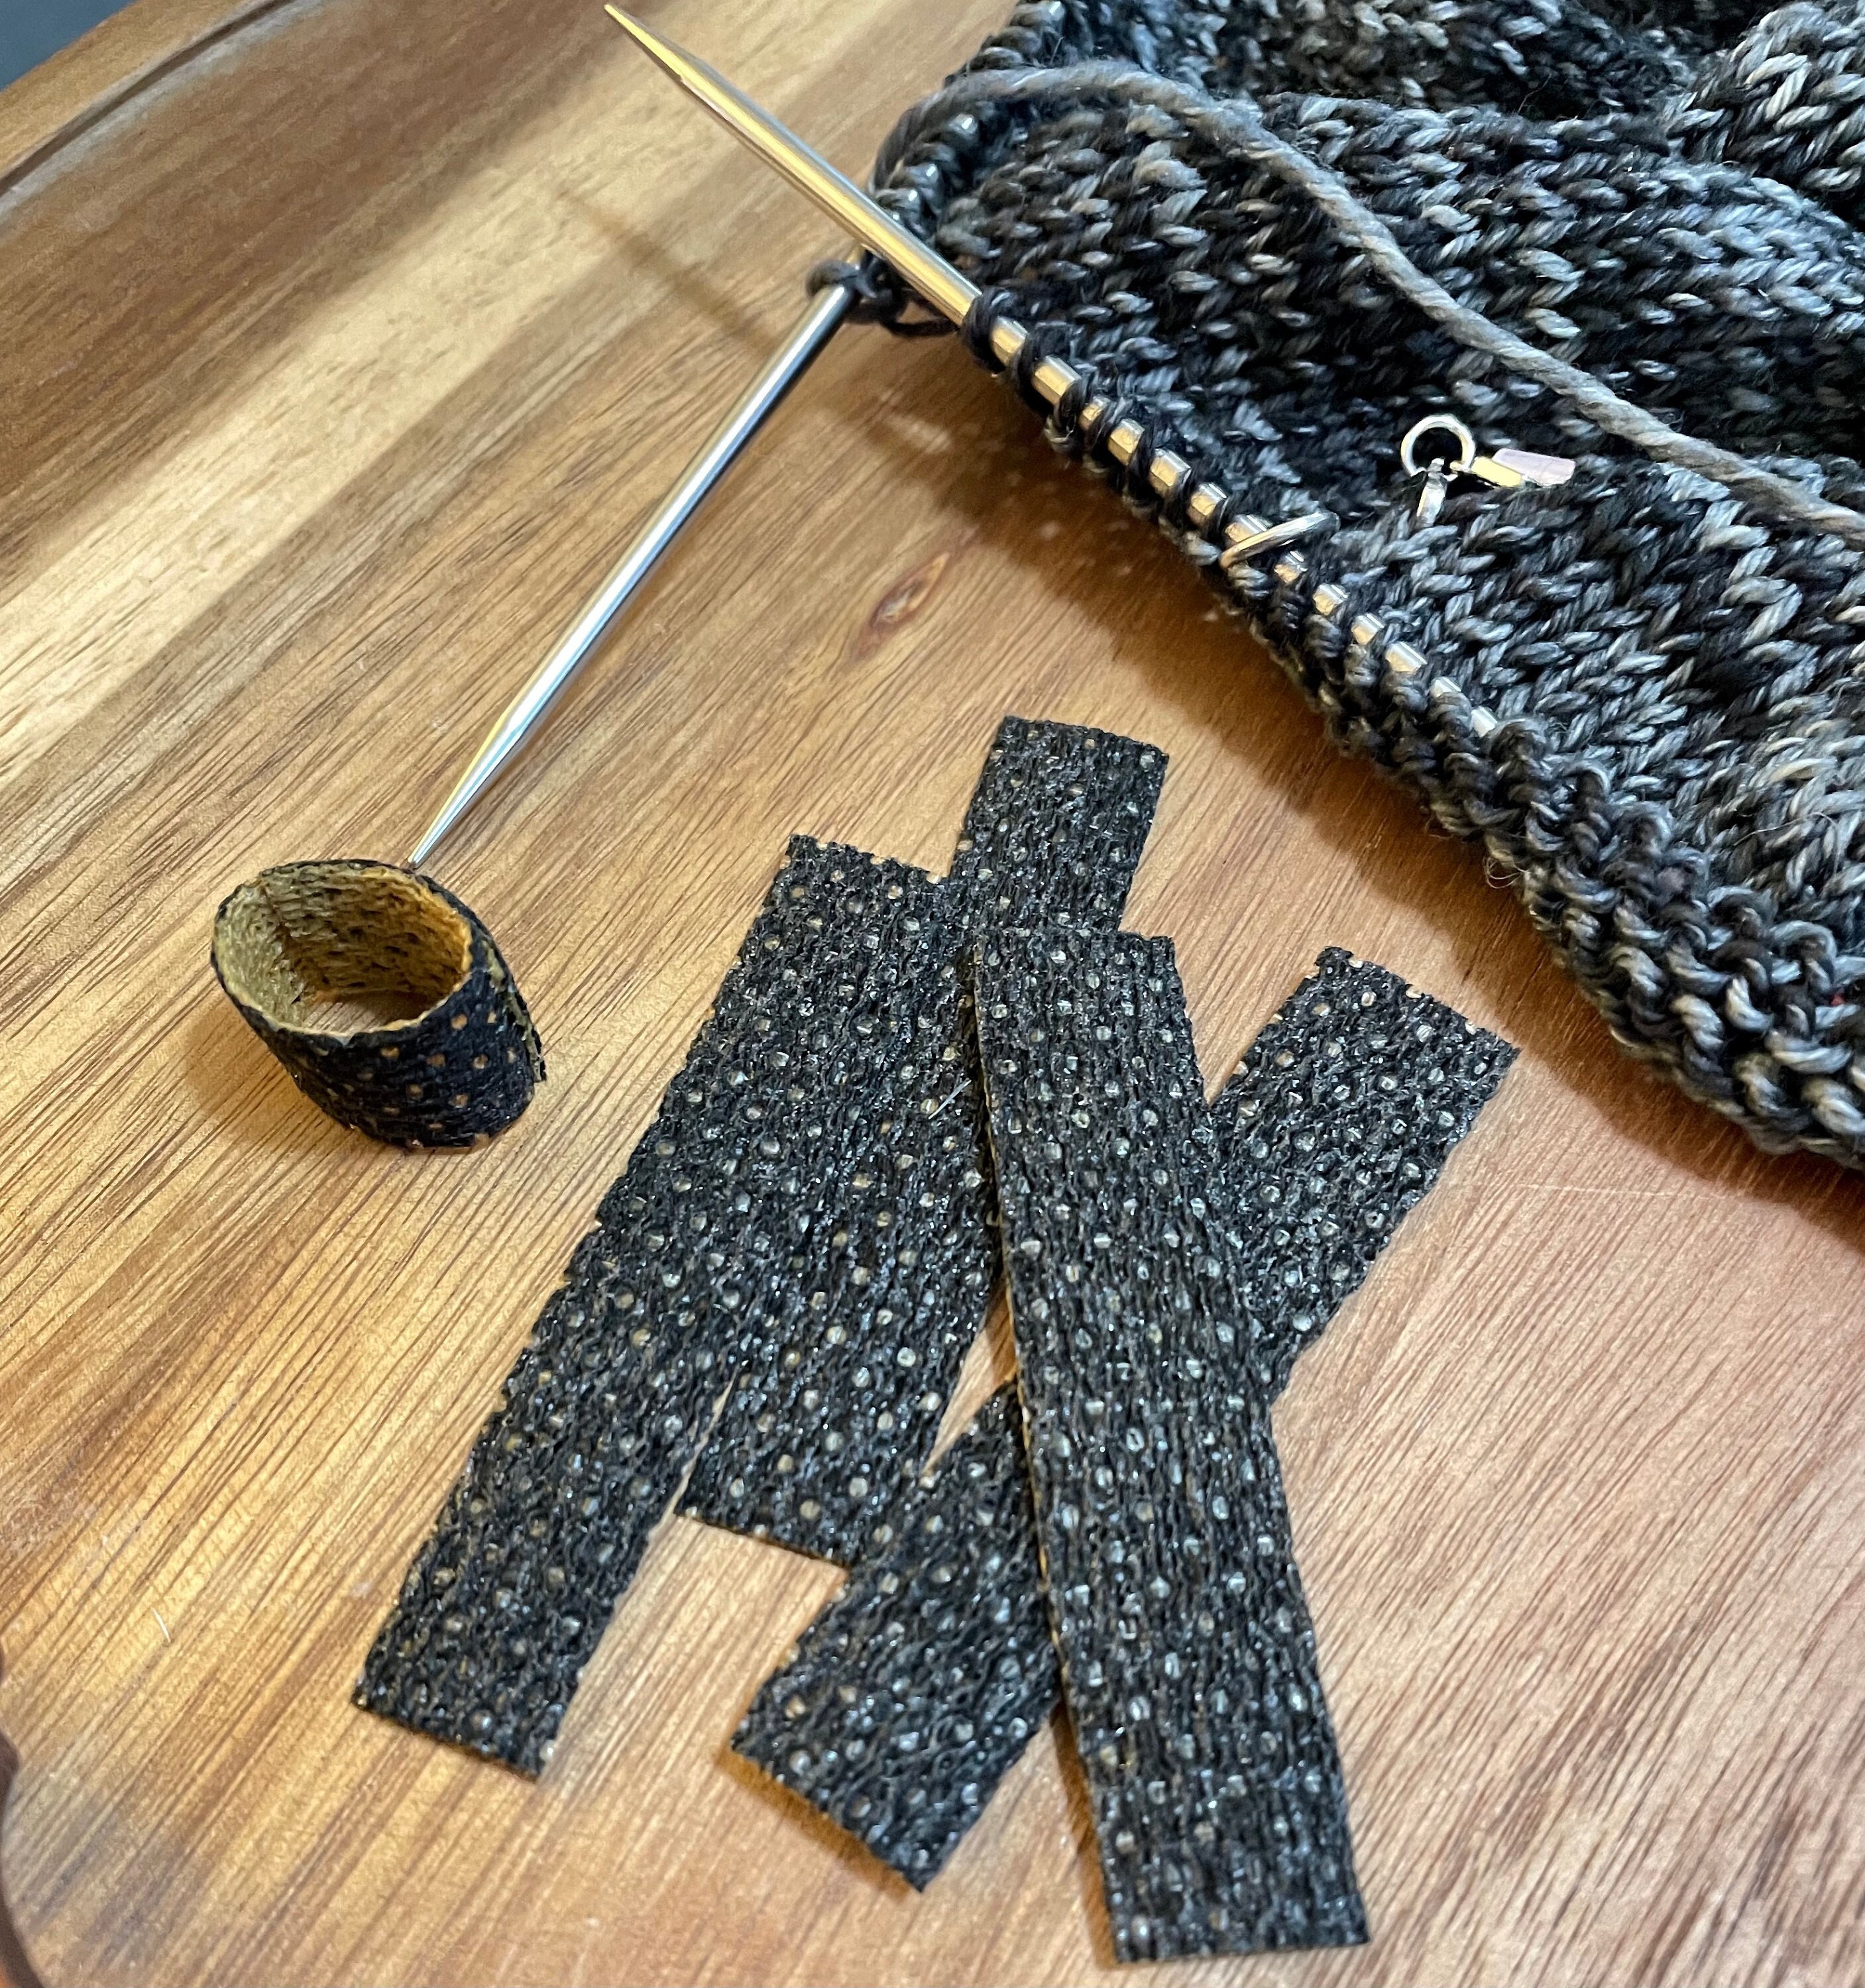 BESTOYARD Coil Thimble Wool Weaving Tool Knitting Ring Norwegian Knitting  Thimble Metal Yarn Guide Earth Tones Knitted Sweater